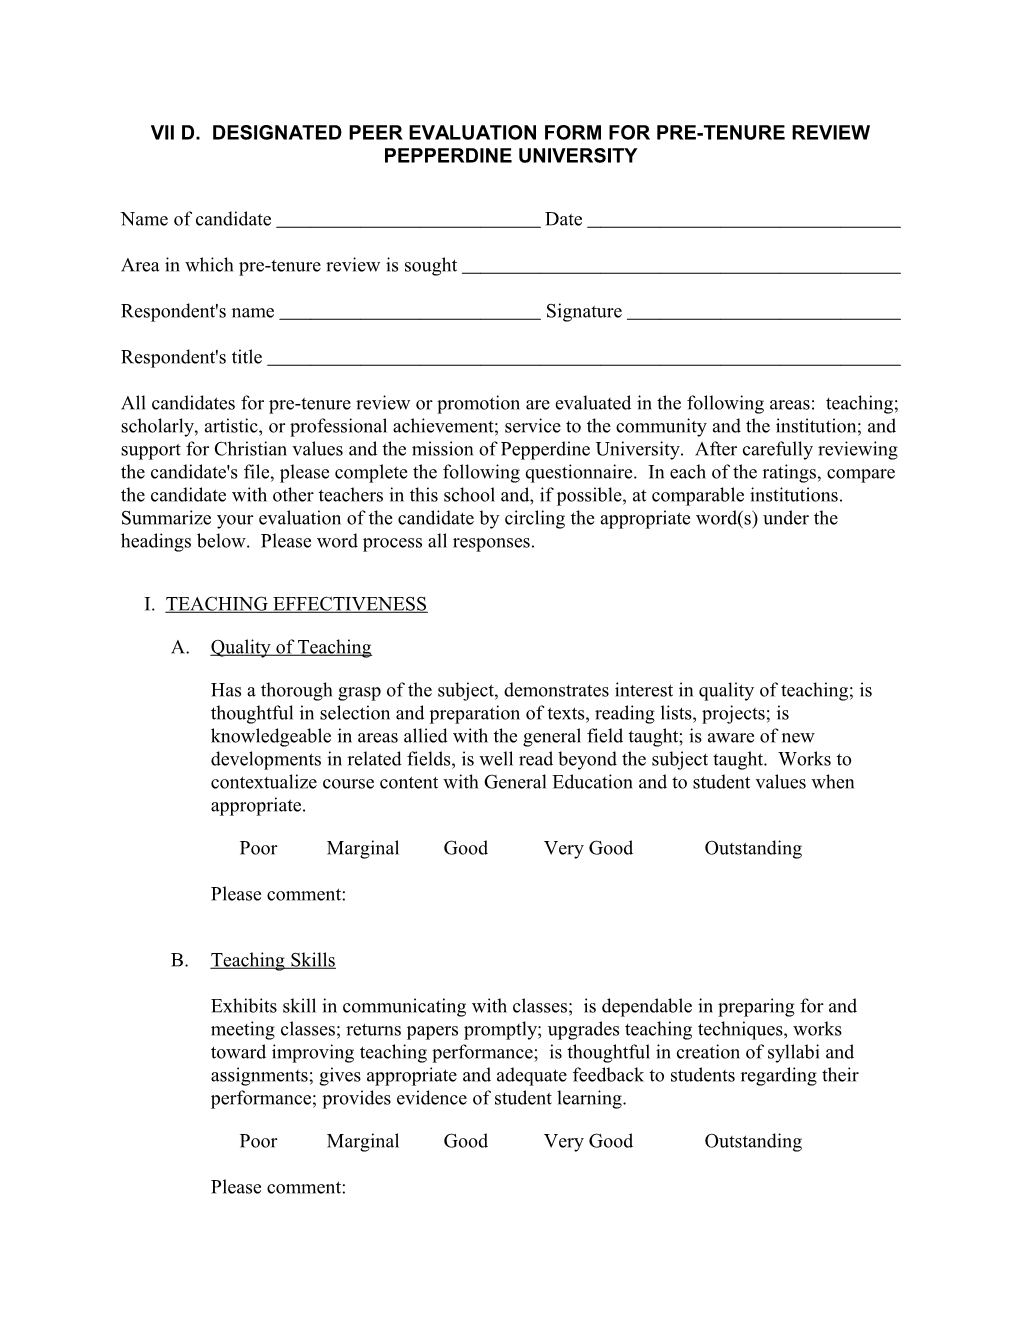 Vii D. Designated Peer Evaluation Form for Pre-Tenure Review